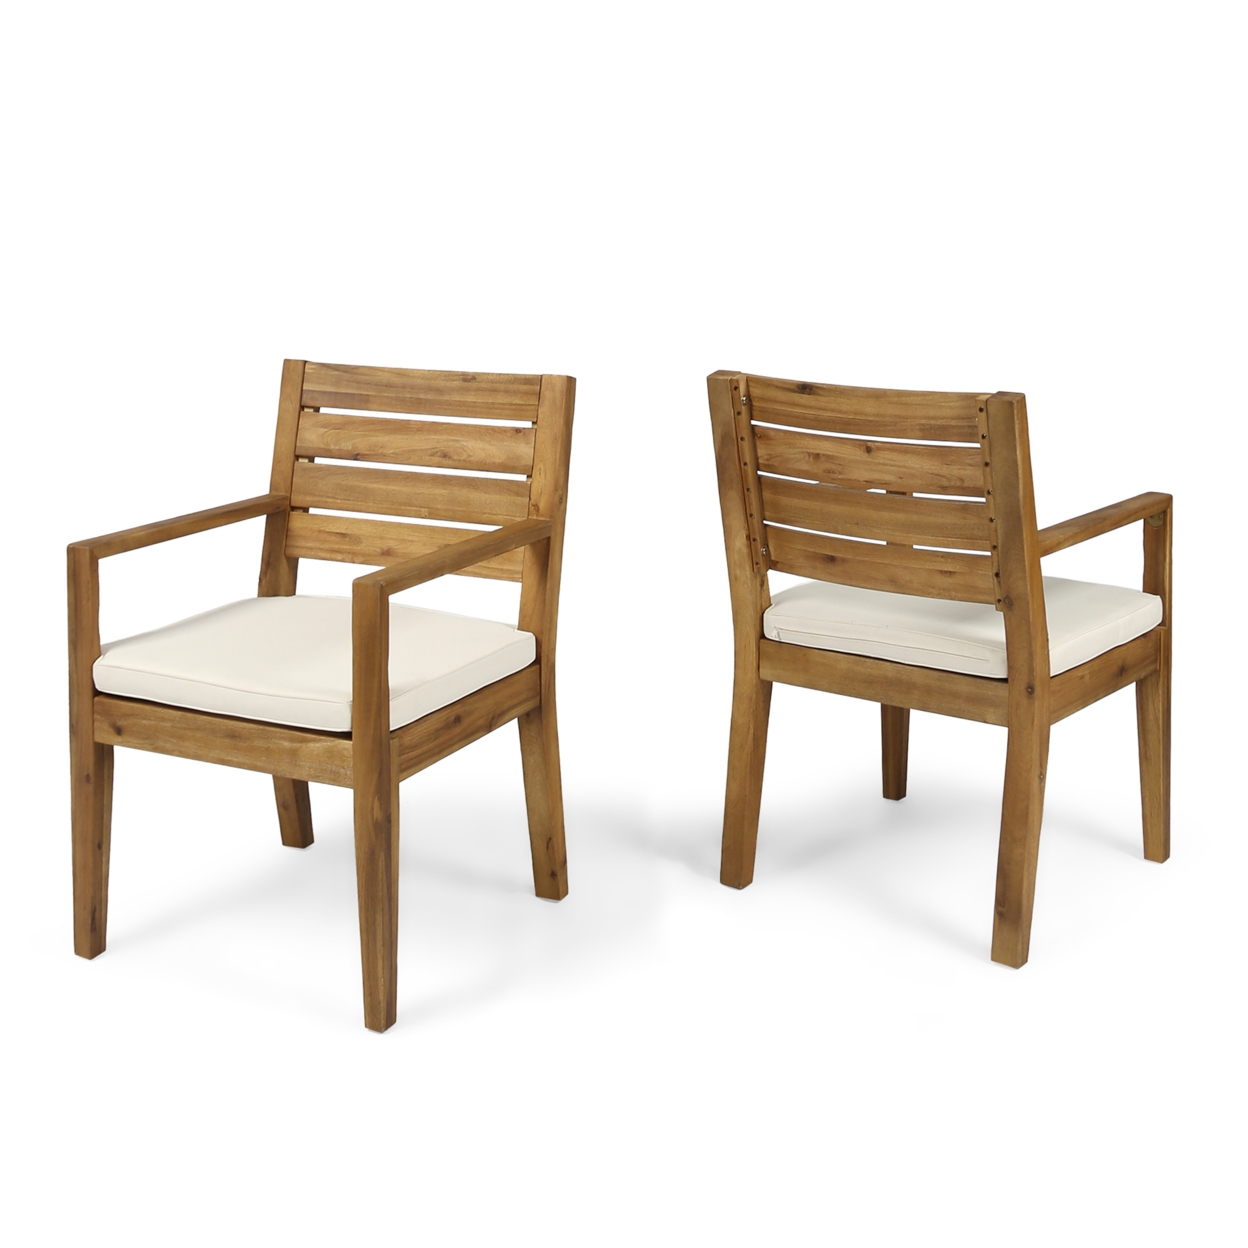 Arely Outdoor Acacia Wood Dining Chairs(Set Of 2) - Sandblast Dark Grey + Light Gray